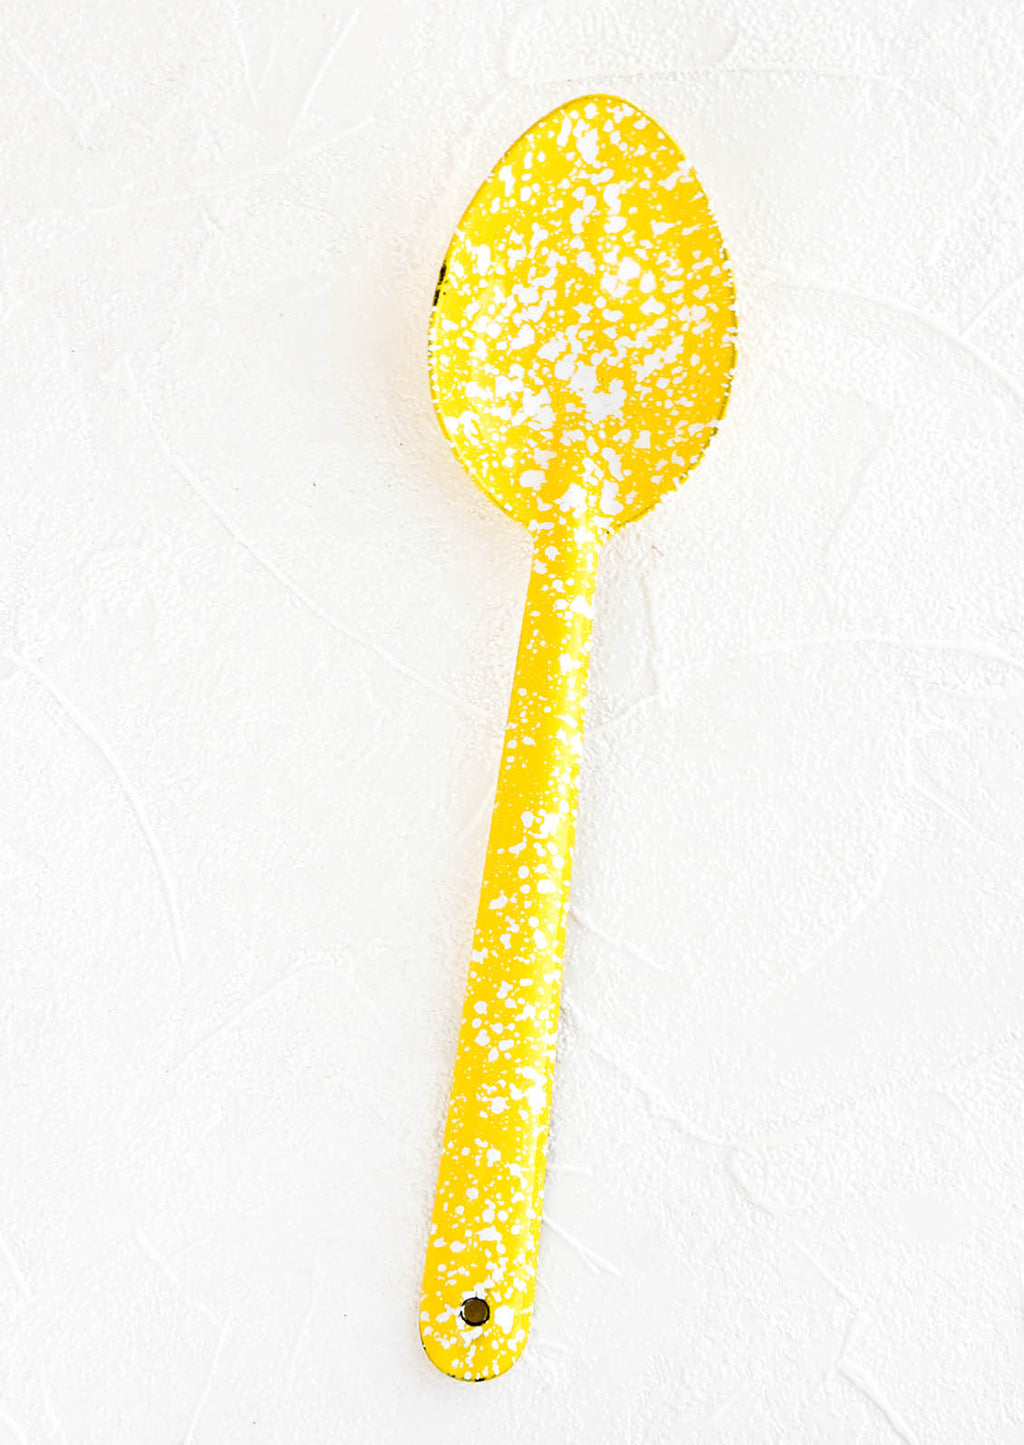 1: Enamel coated metal spoon in yellow and white splatter print